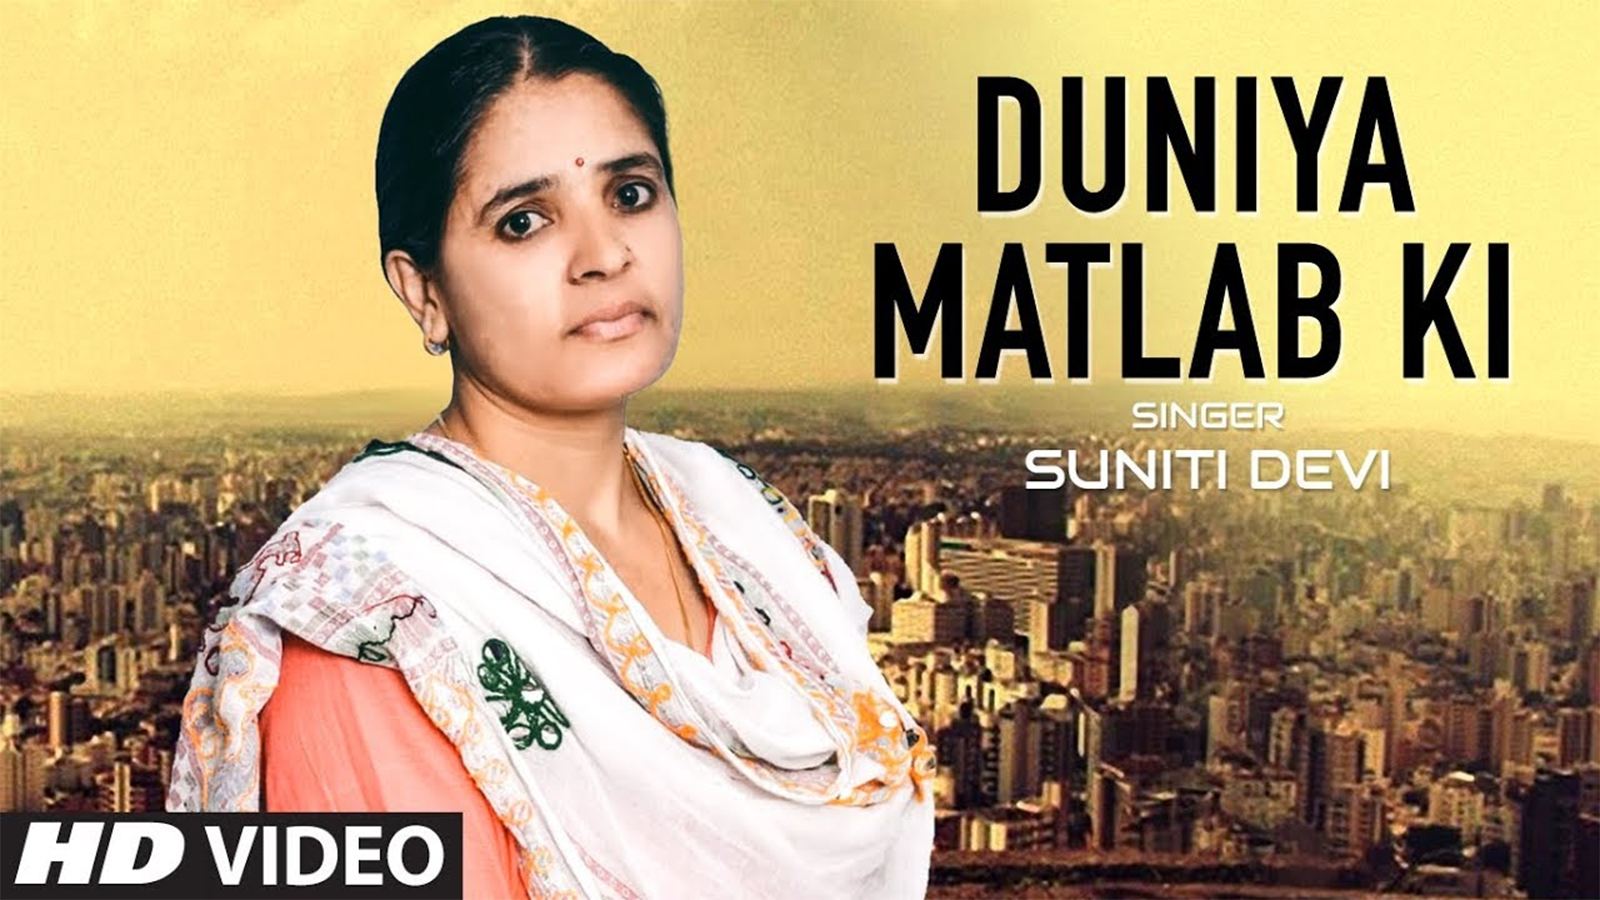 Latest Haryanvi Song Duniya Matlab Ki Sung By Suniti Devi ...